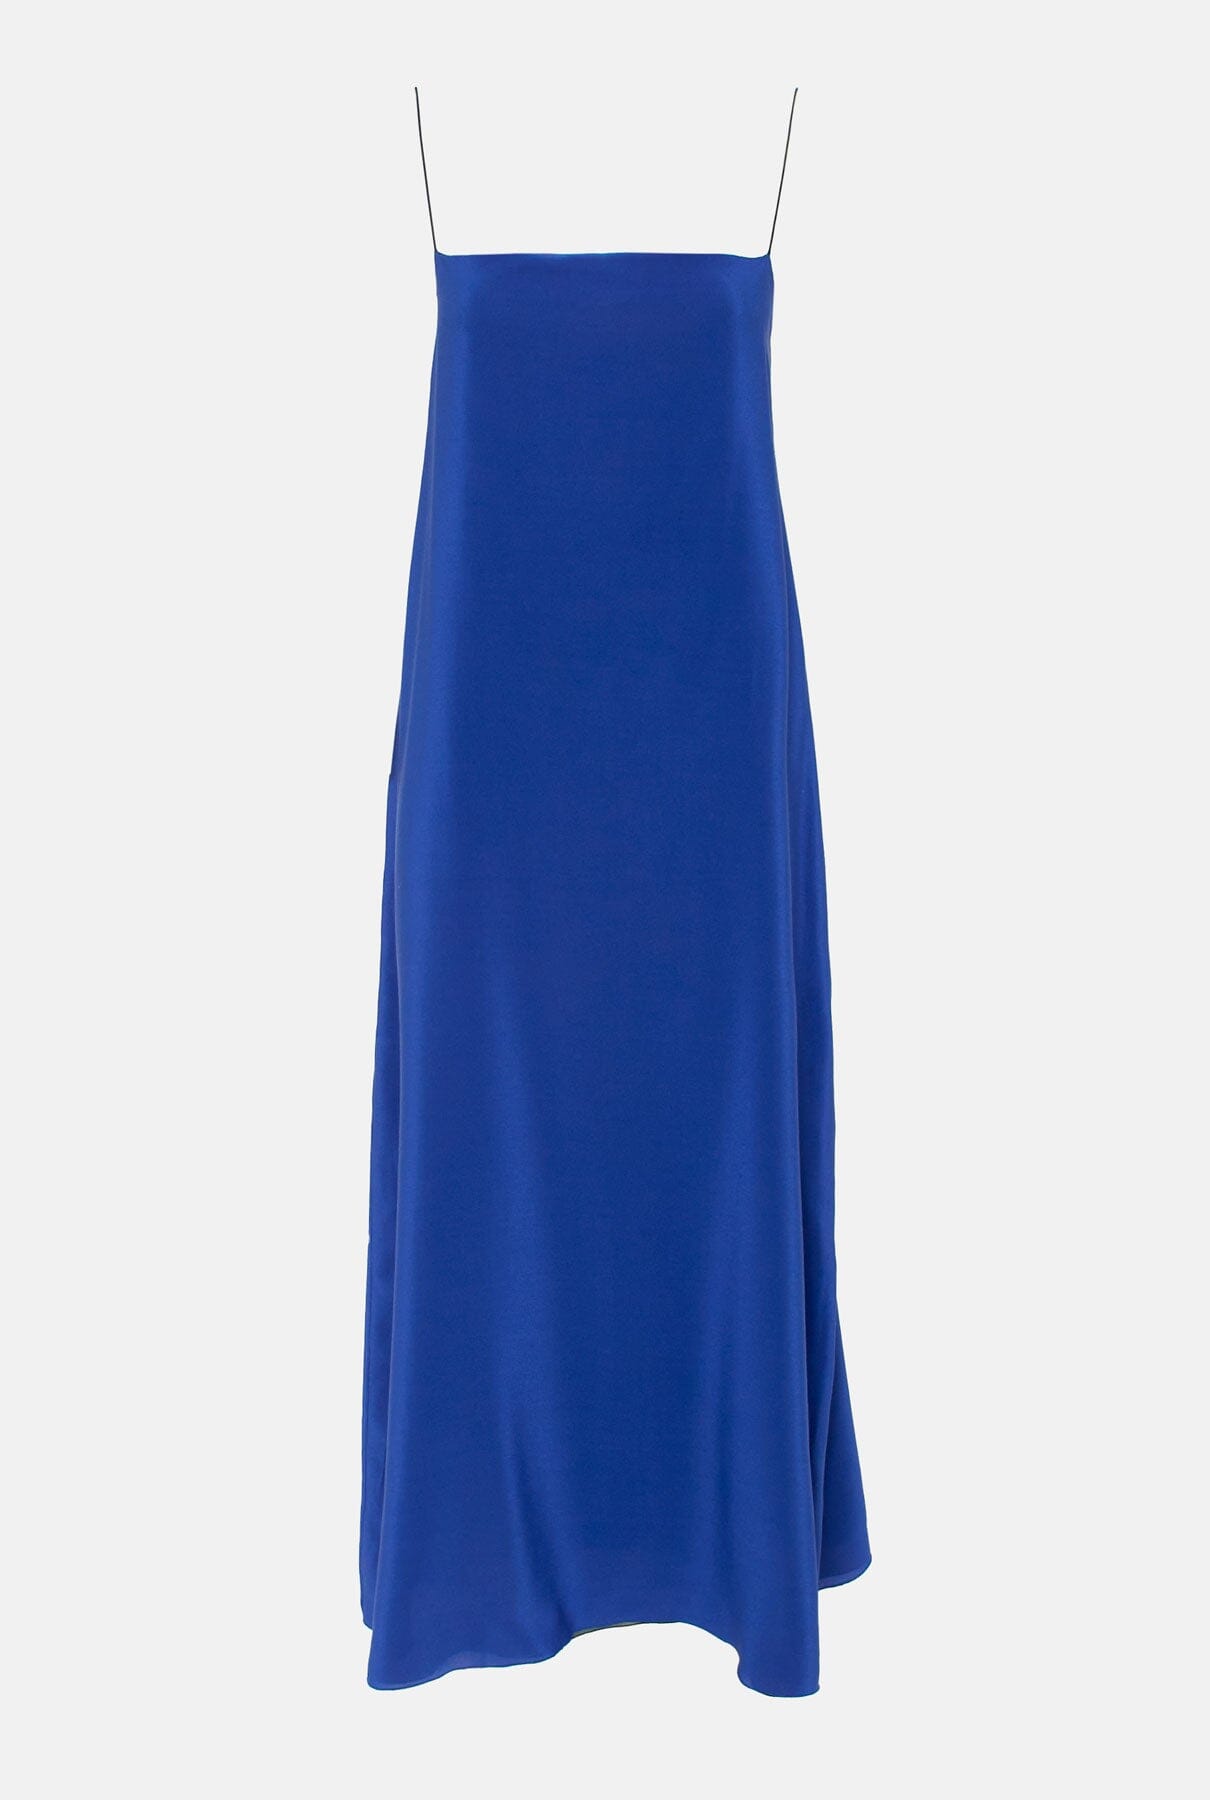 Flor Reversible Extra Long Dress blue/navy blue Dresses Atelier Aletheia 